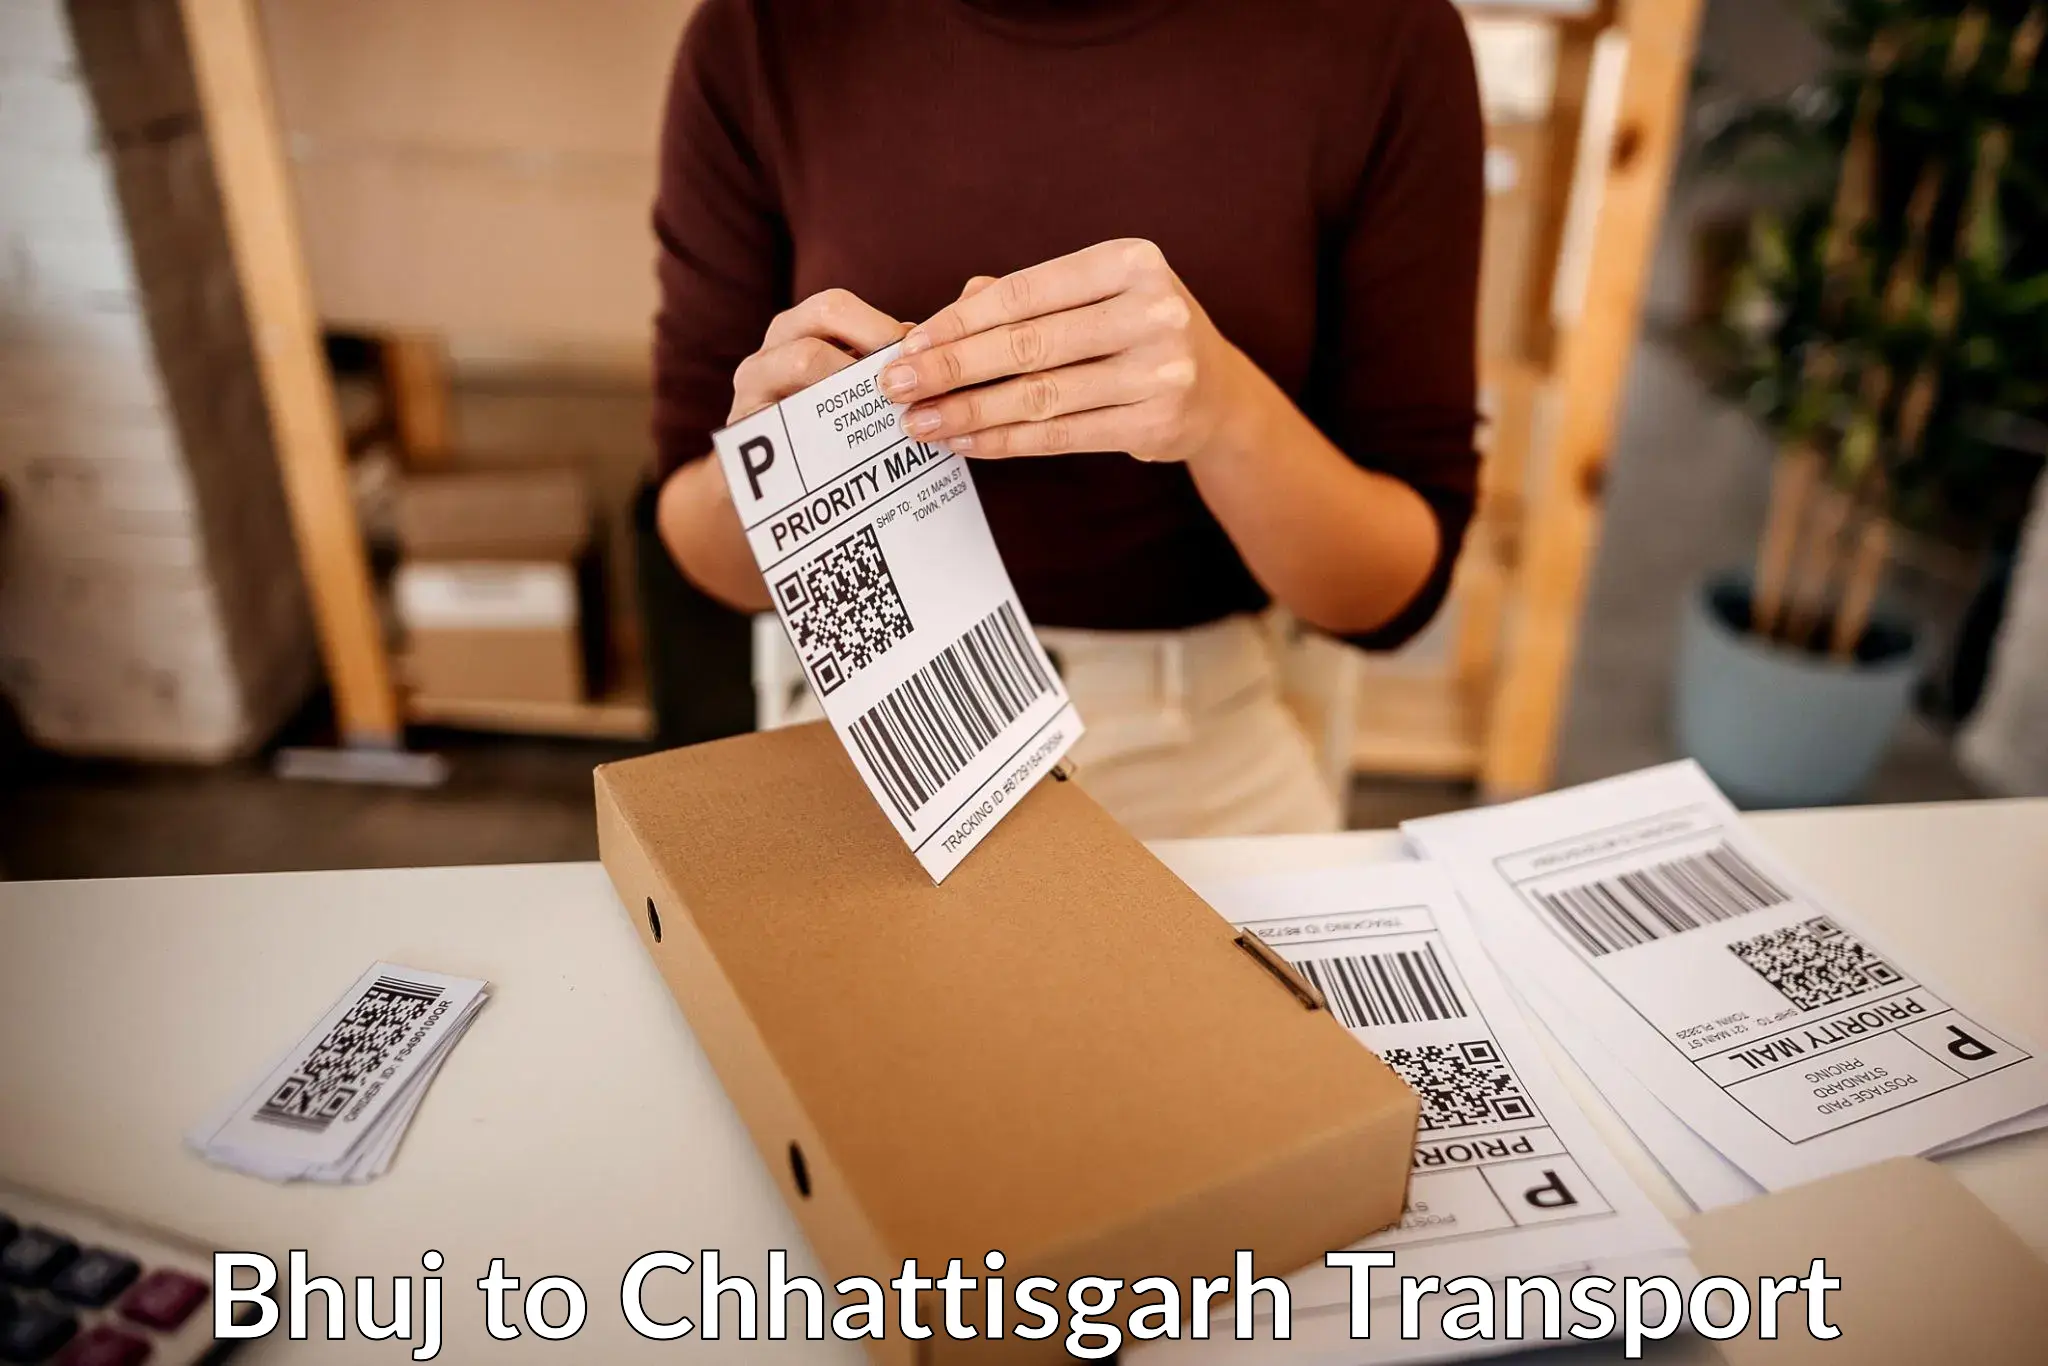 Goods delivery service Bhuj to Korea Chhattisgarh